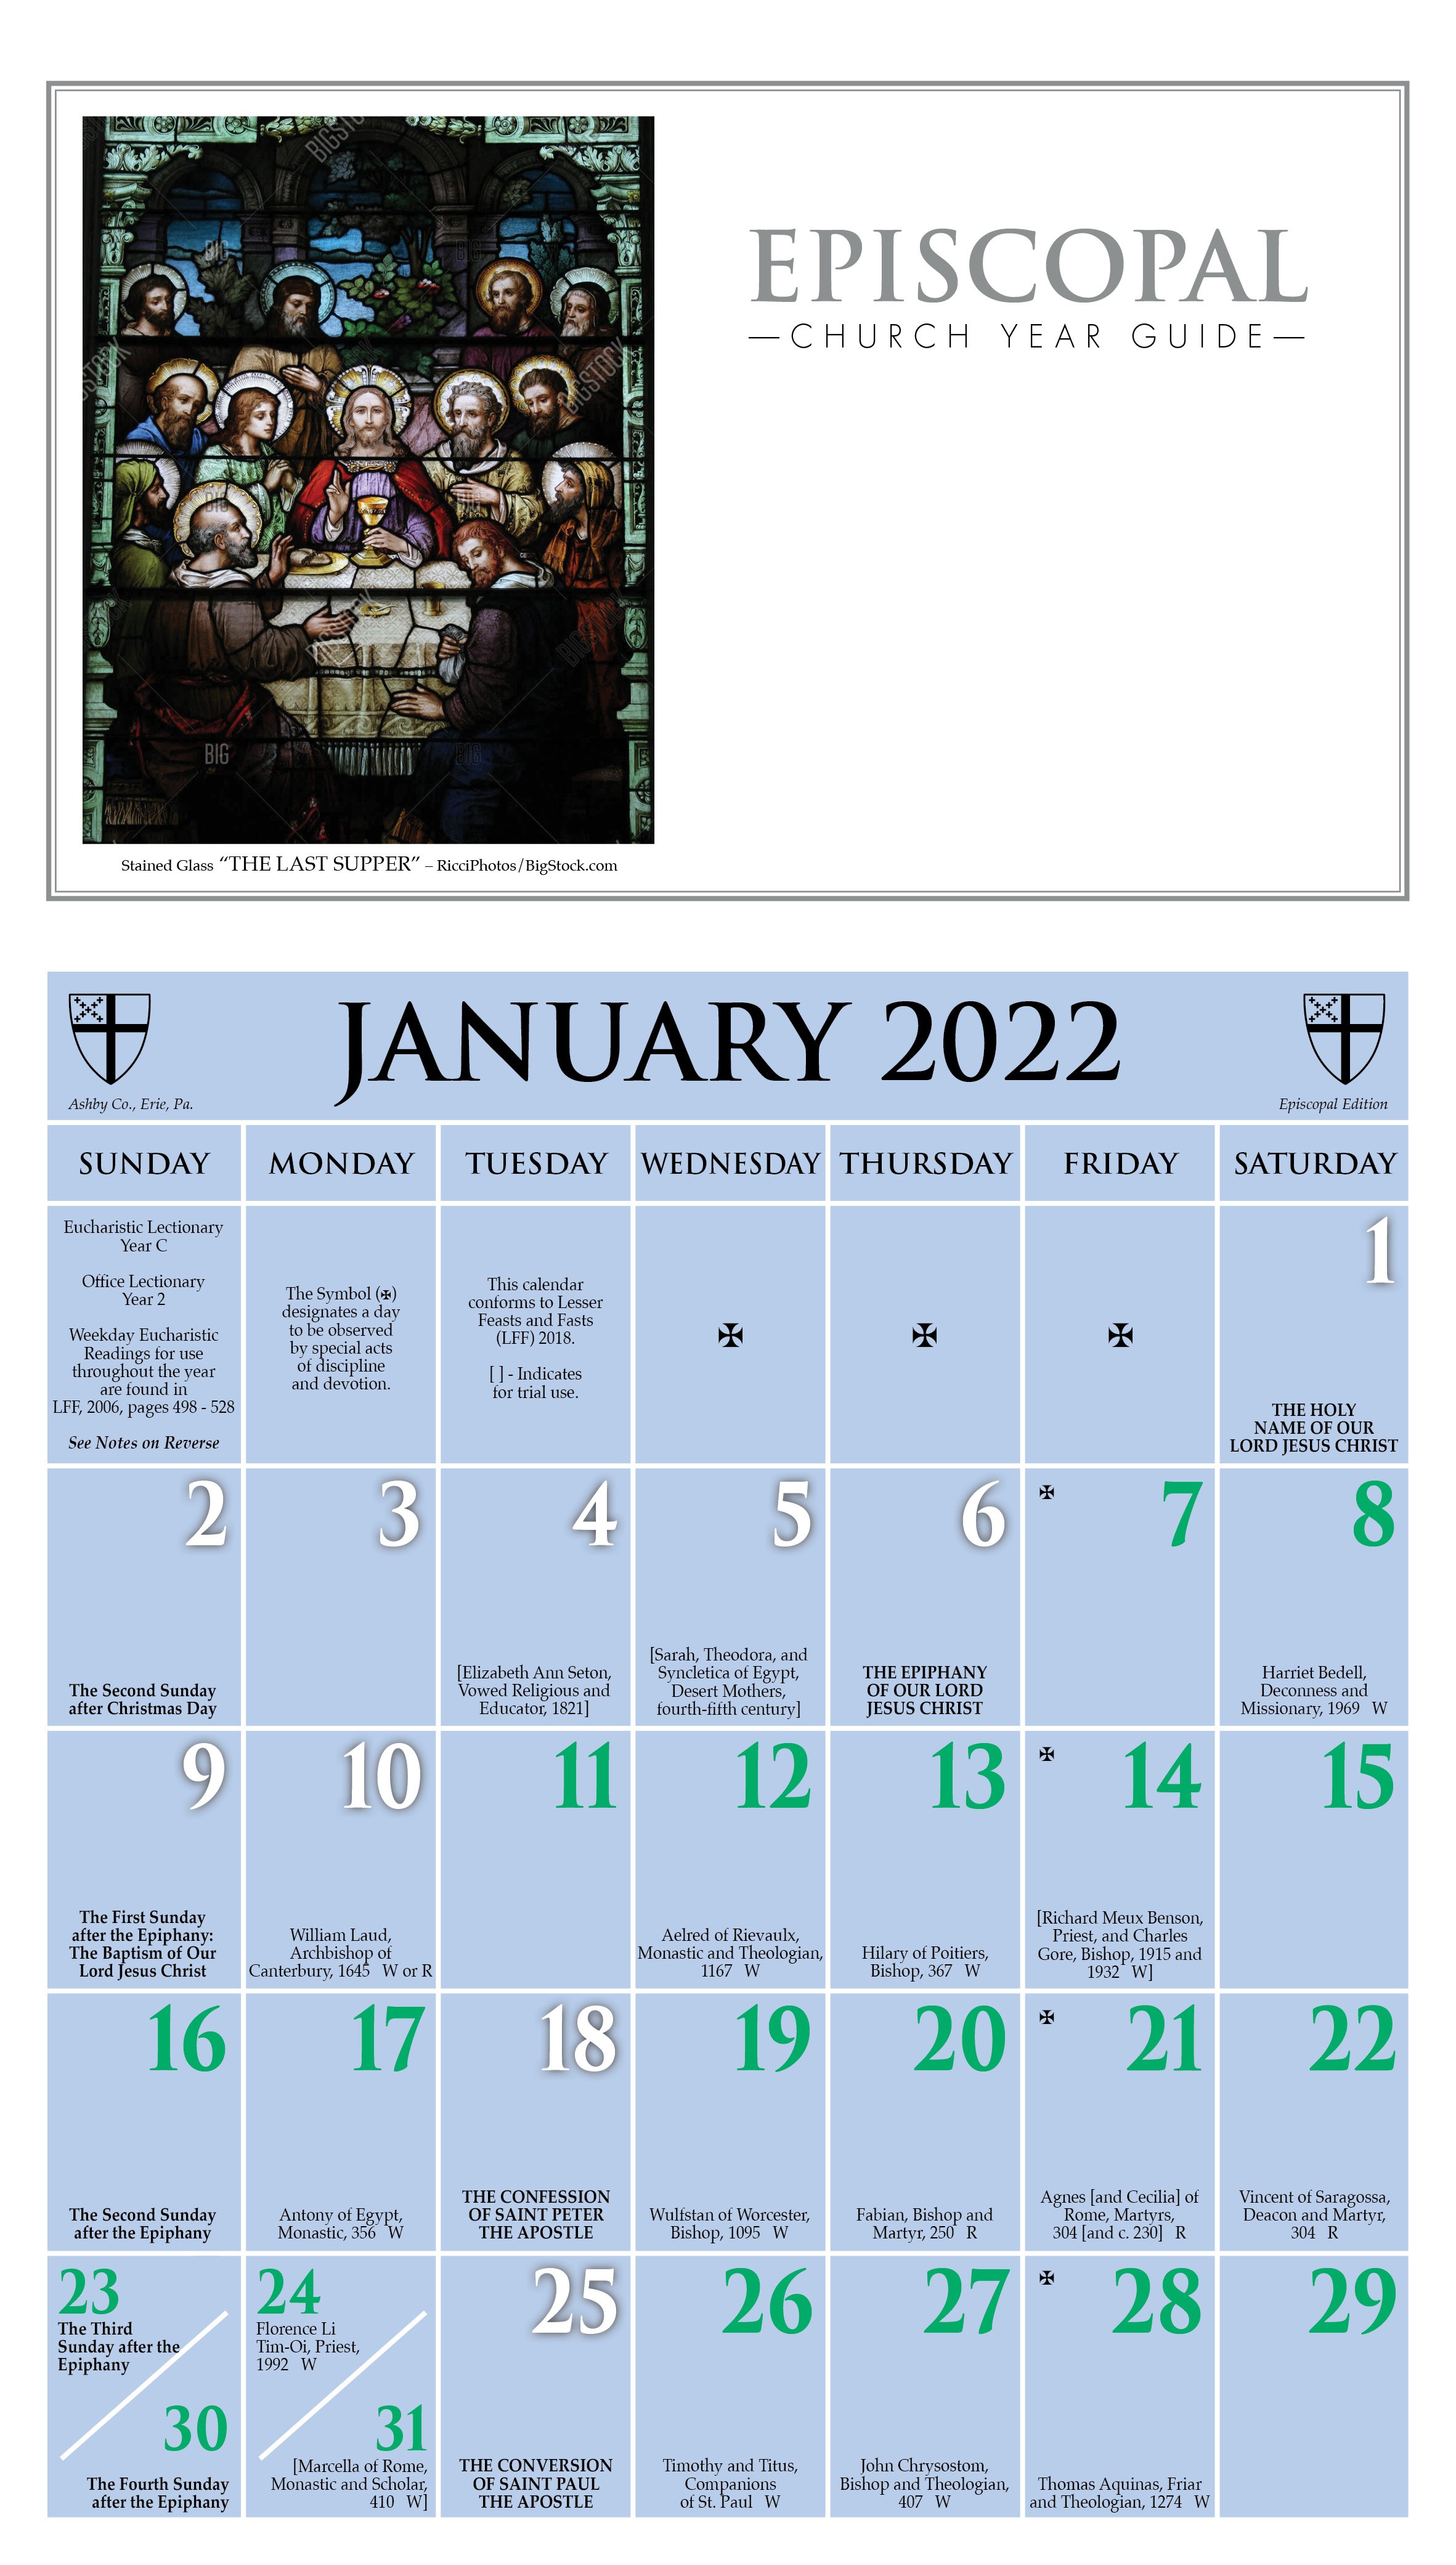 Church Year Calendar 2022 Churchpublishing.org: 2022 Episcopal Church Year Guide Kalendar